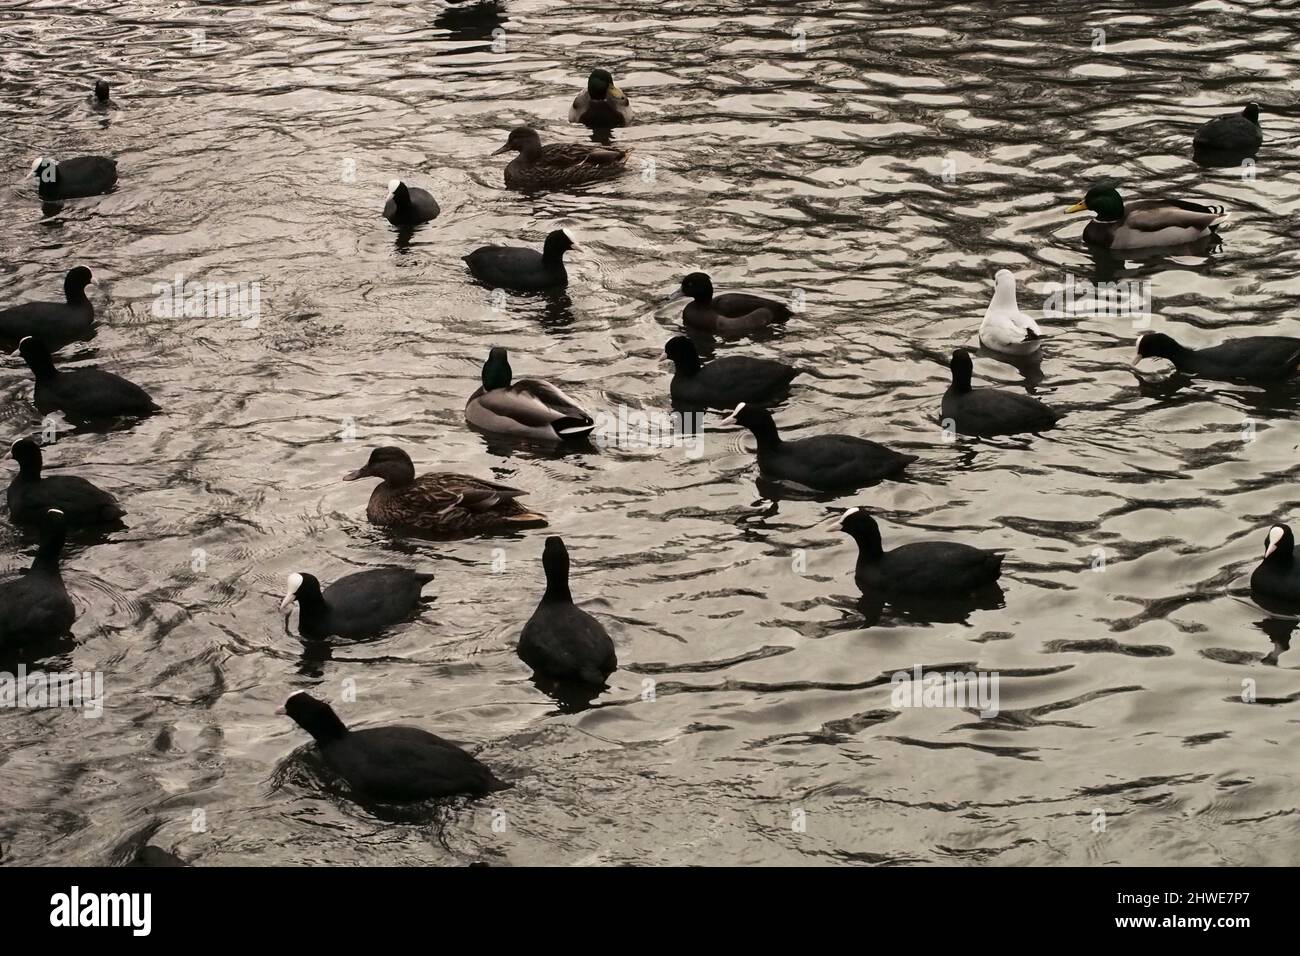 A feeding frenzy on a choppy freshwater lake of coots, mallard ducks and a black headed gull Stock Photo